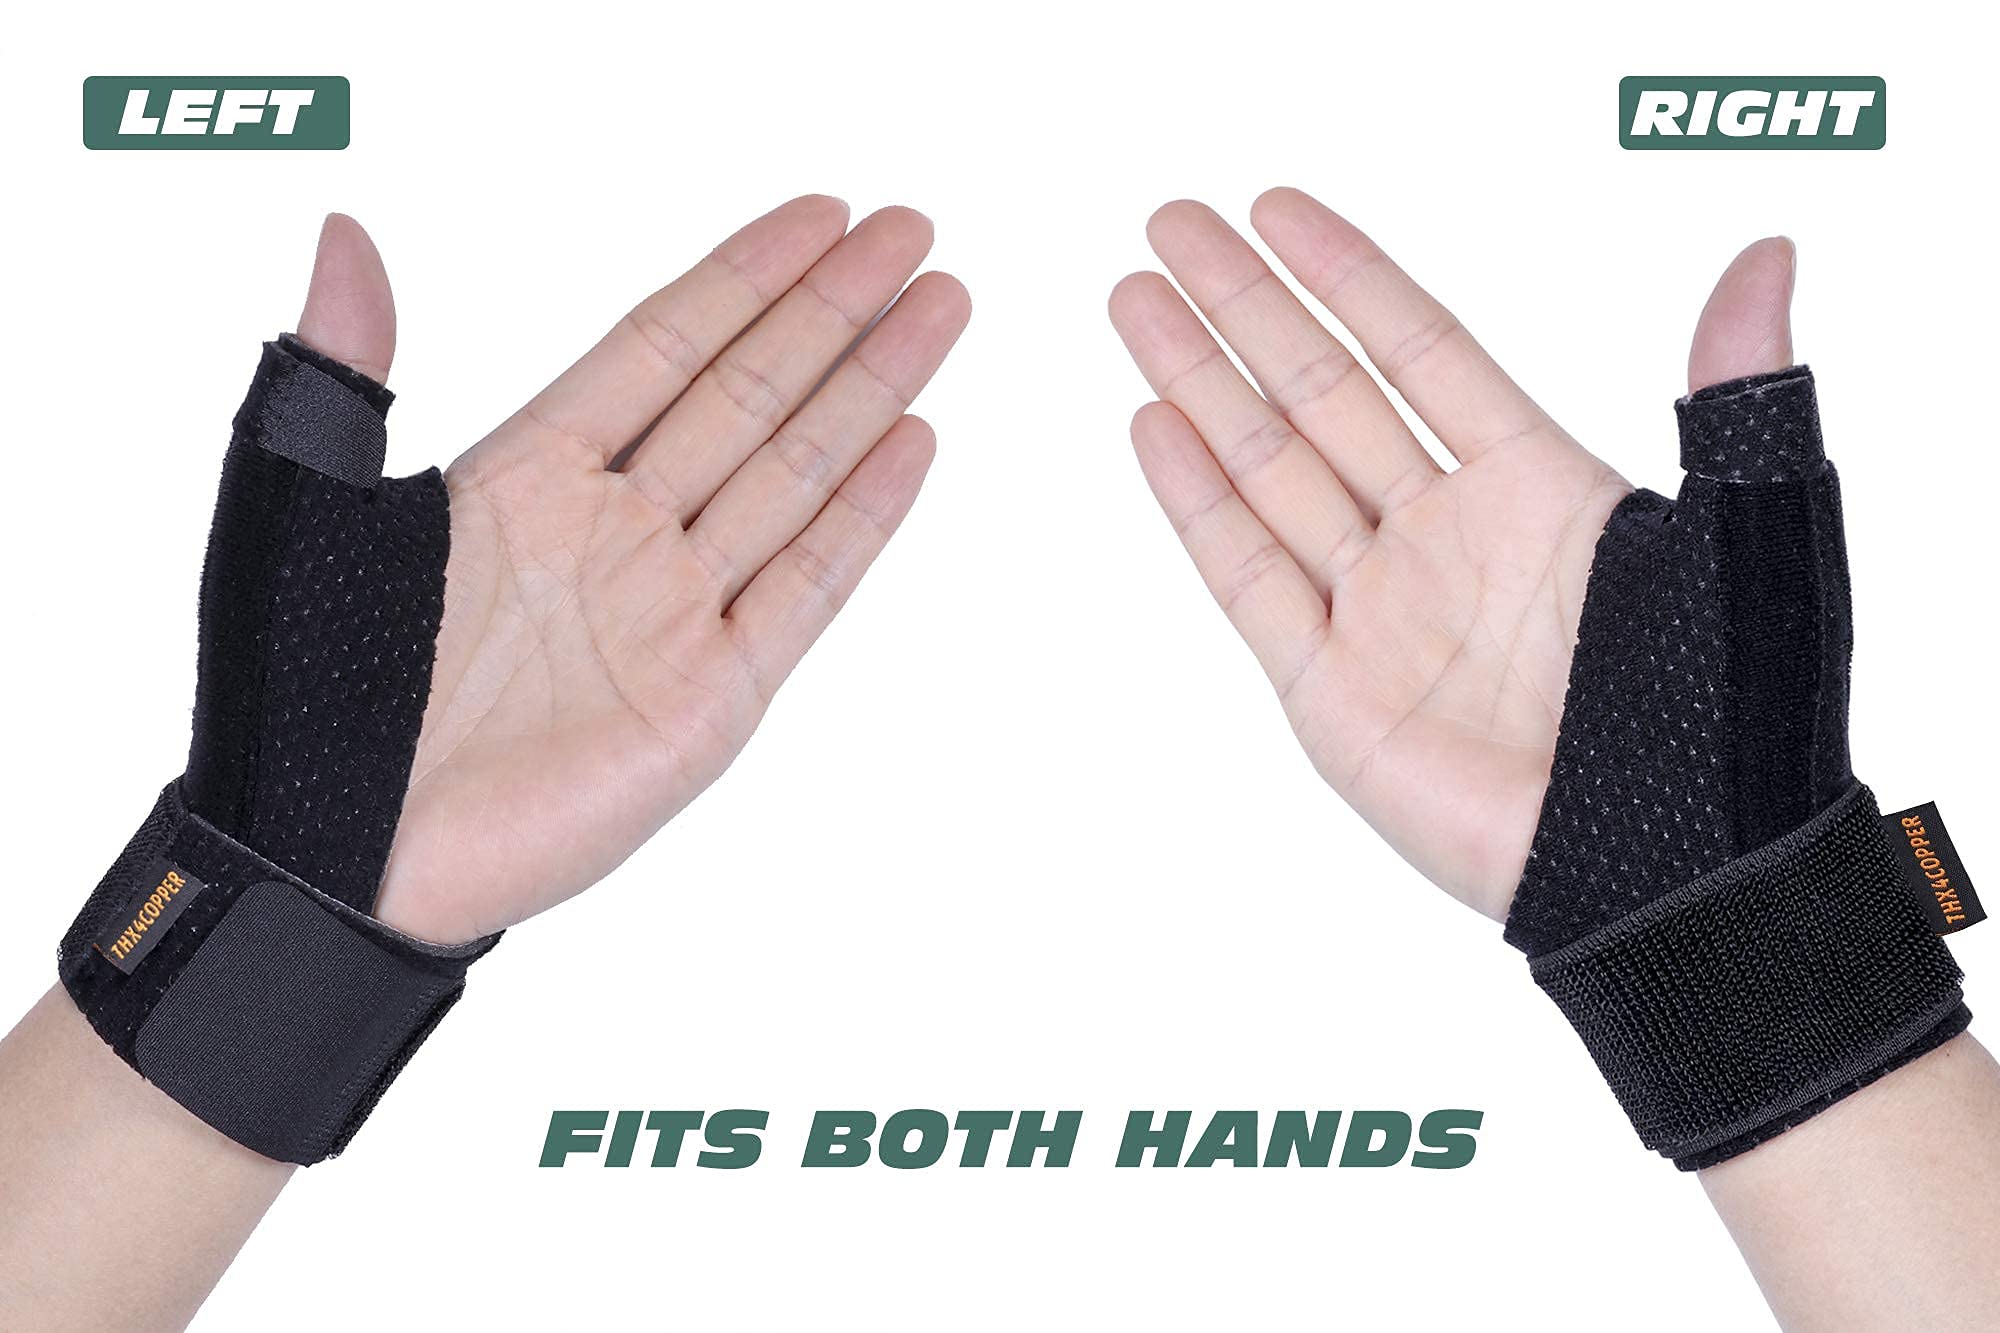 THX4COPPER Reversible Thumb & Wrist Stabilizer Splint for BlackBerry Thumb,Trigger Finger, Pain Relief, Arthritis,Tendonitis, Sprained, Carpal Tunnel, Stable,S-M,Single